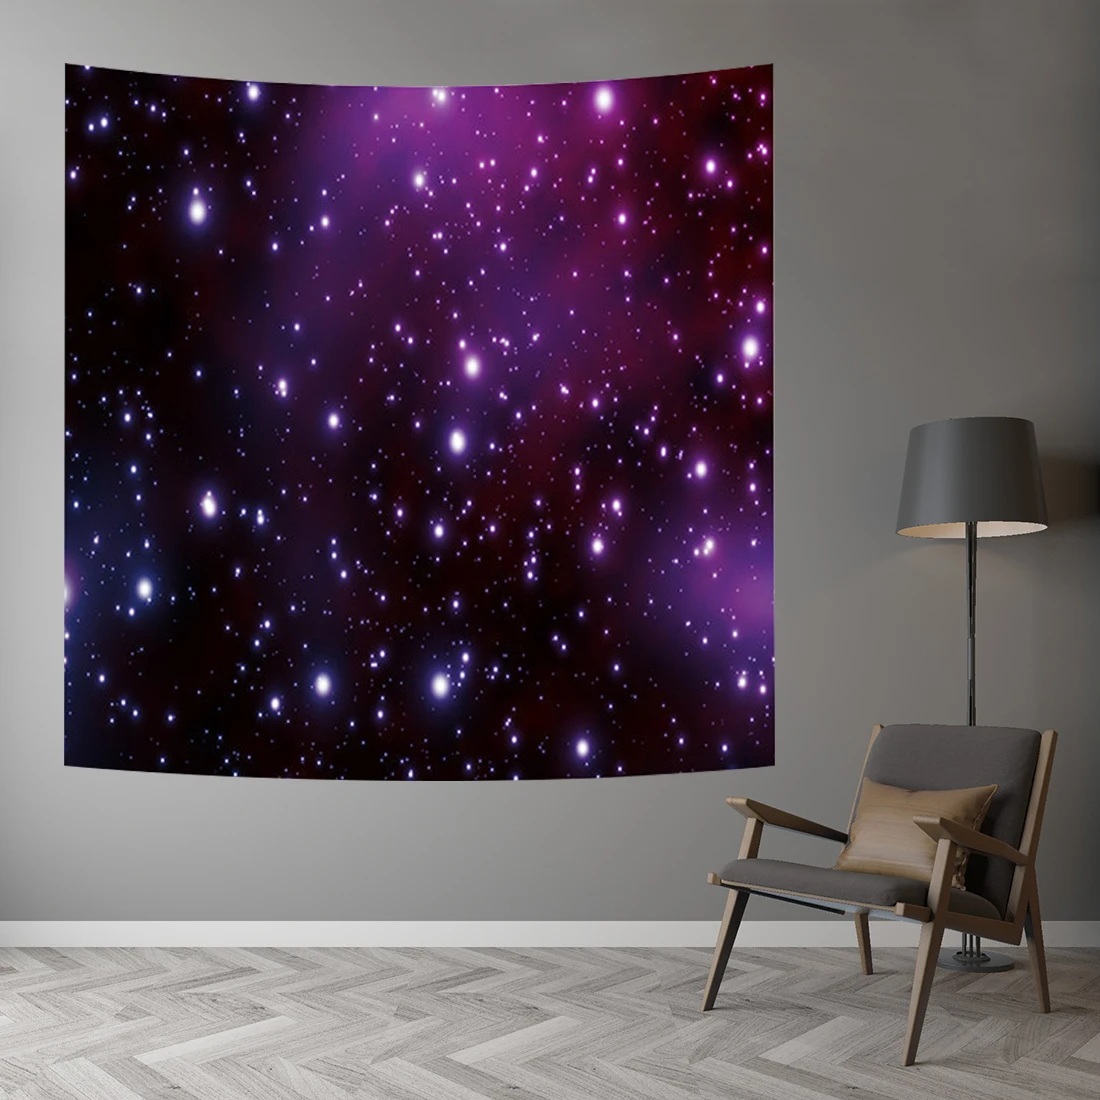 Galaxy стене висит хиппи-гобелен домашний декор в стиле ретро Йога пляжный коврик 150x130 см/200x150 см/150x102 см - Цвет: 9